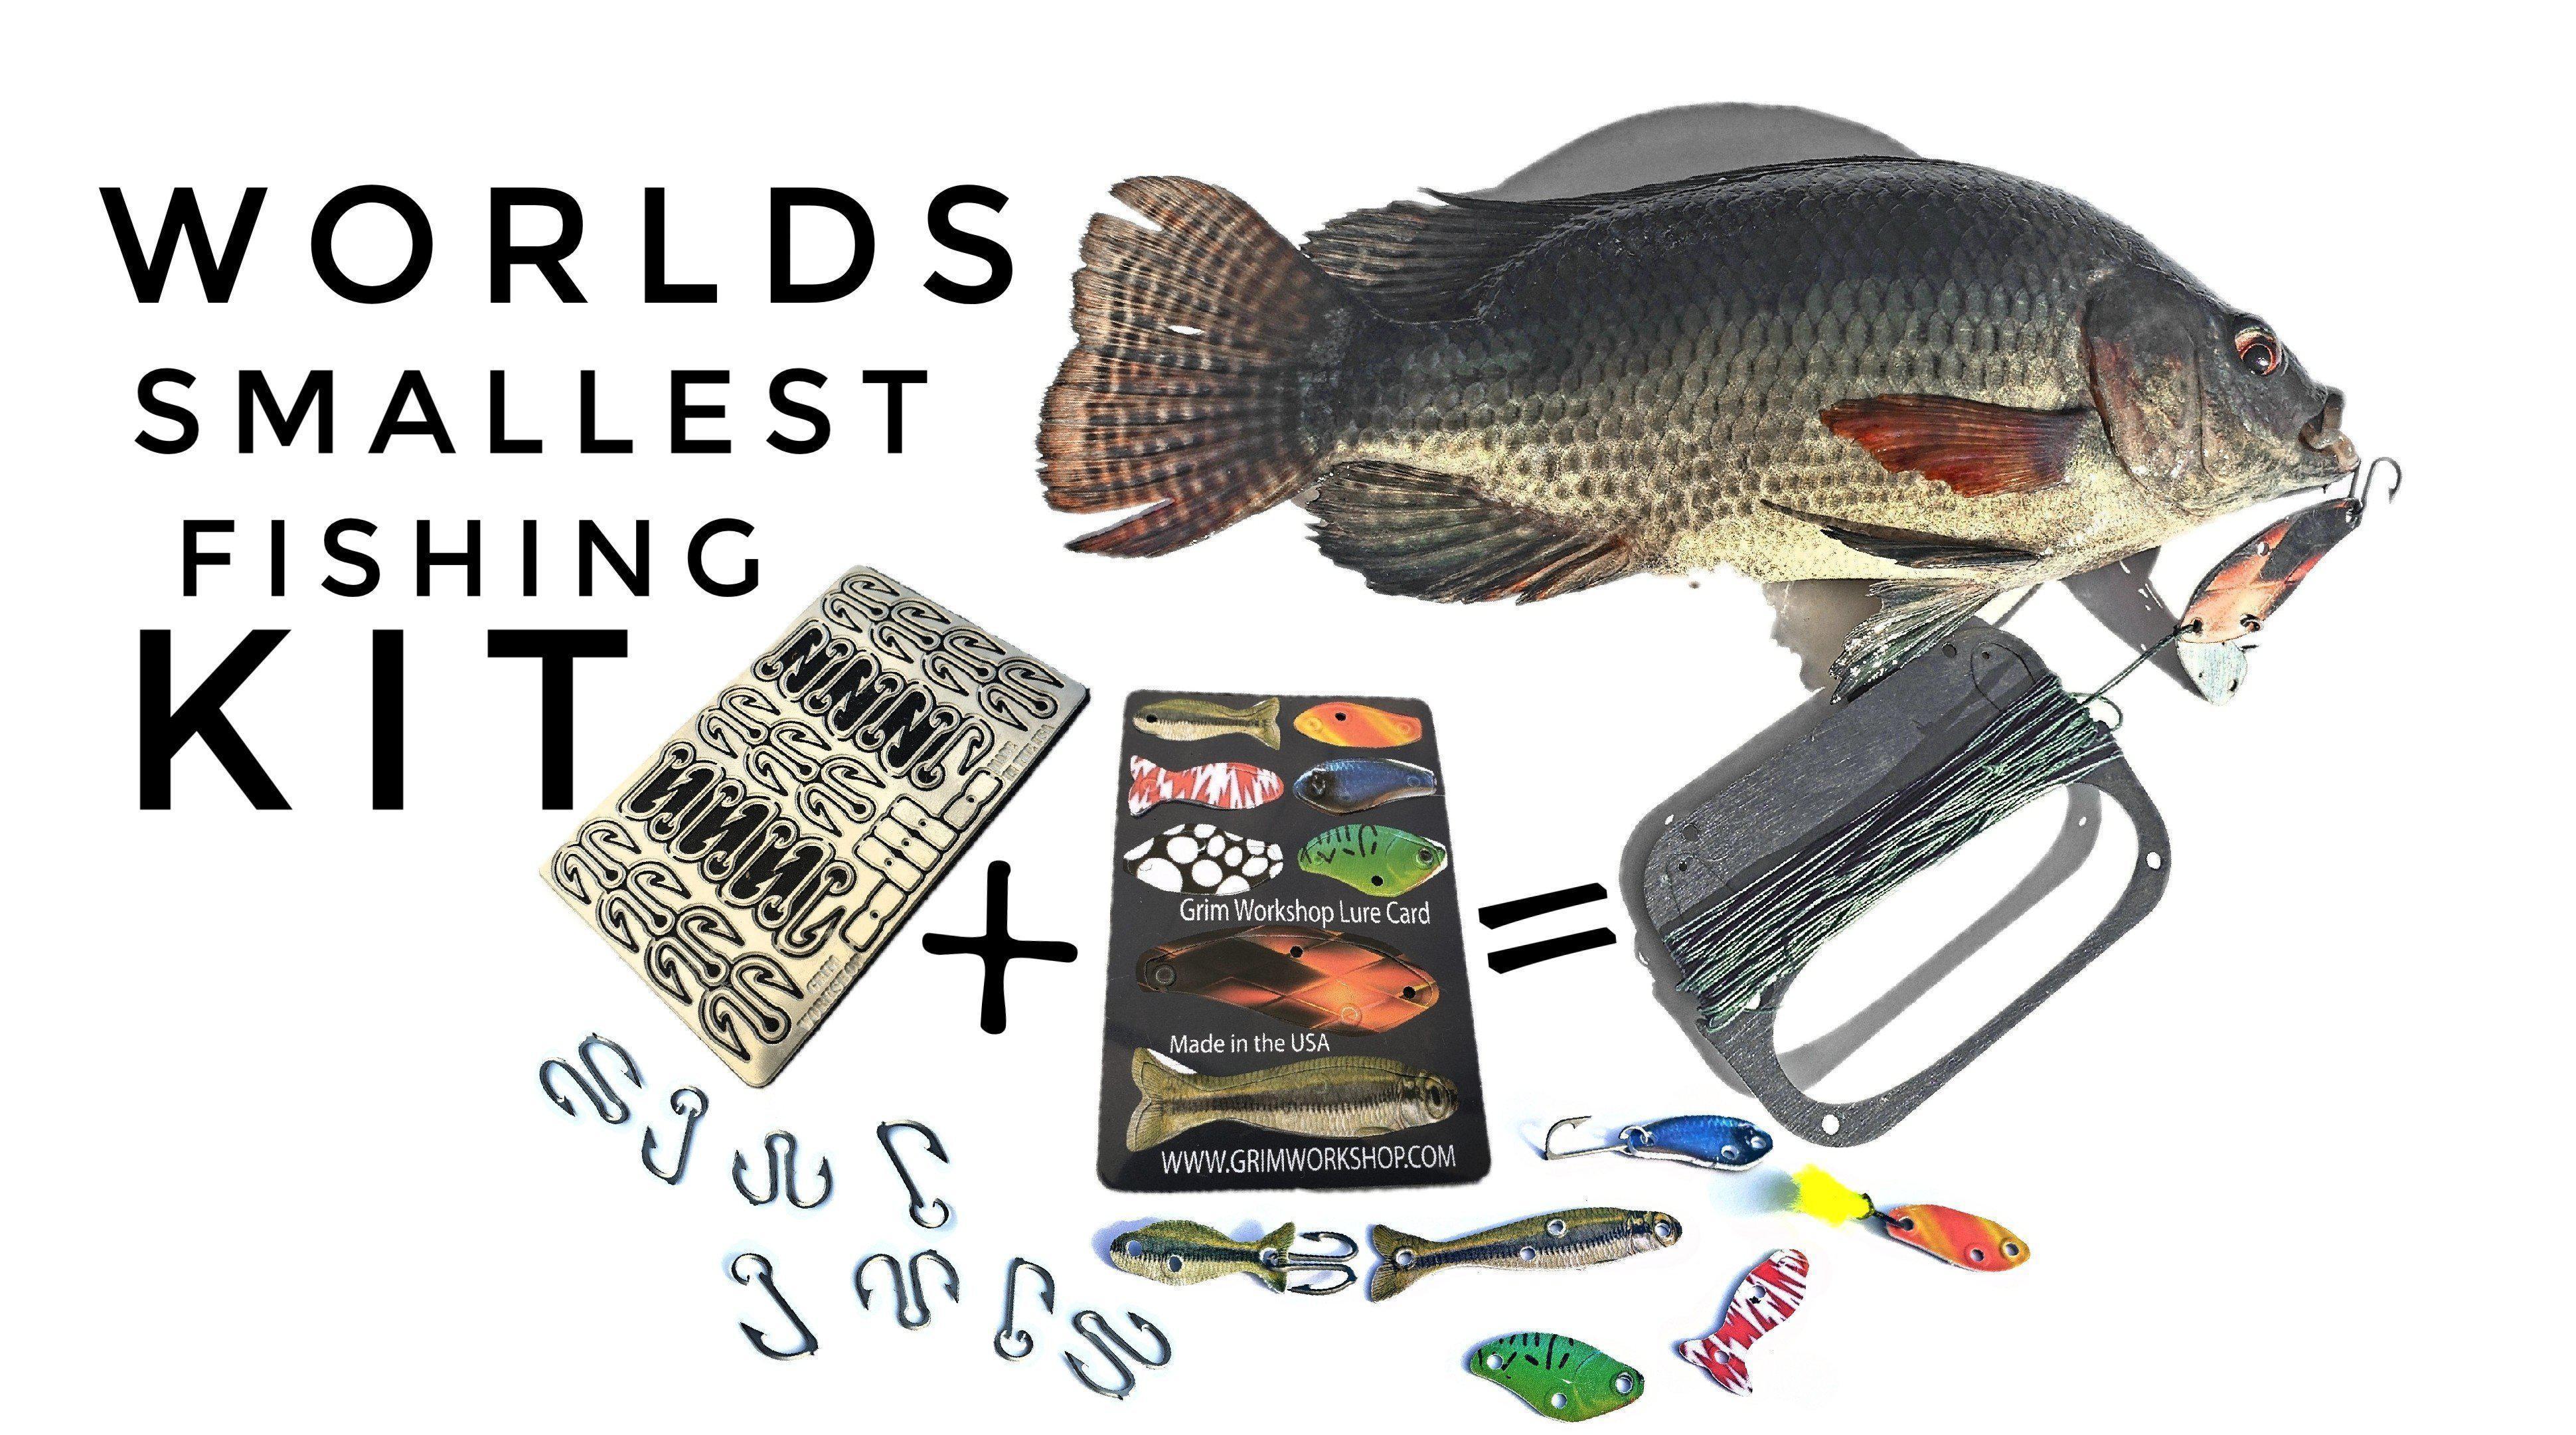 Specialty Hook Fishing Survival Card